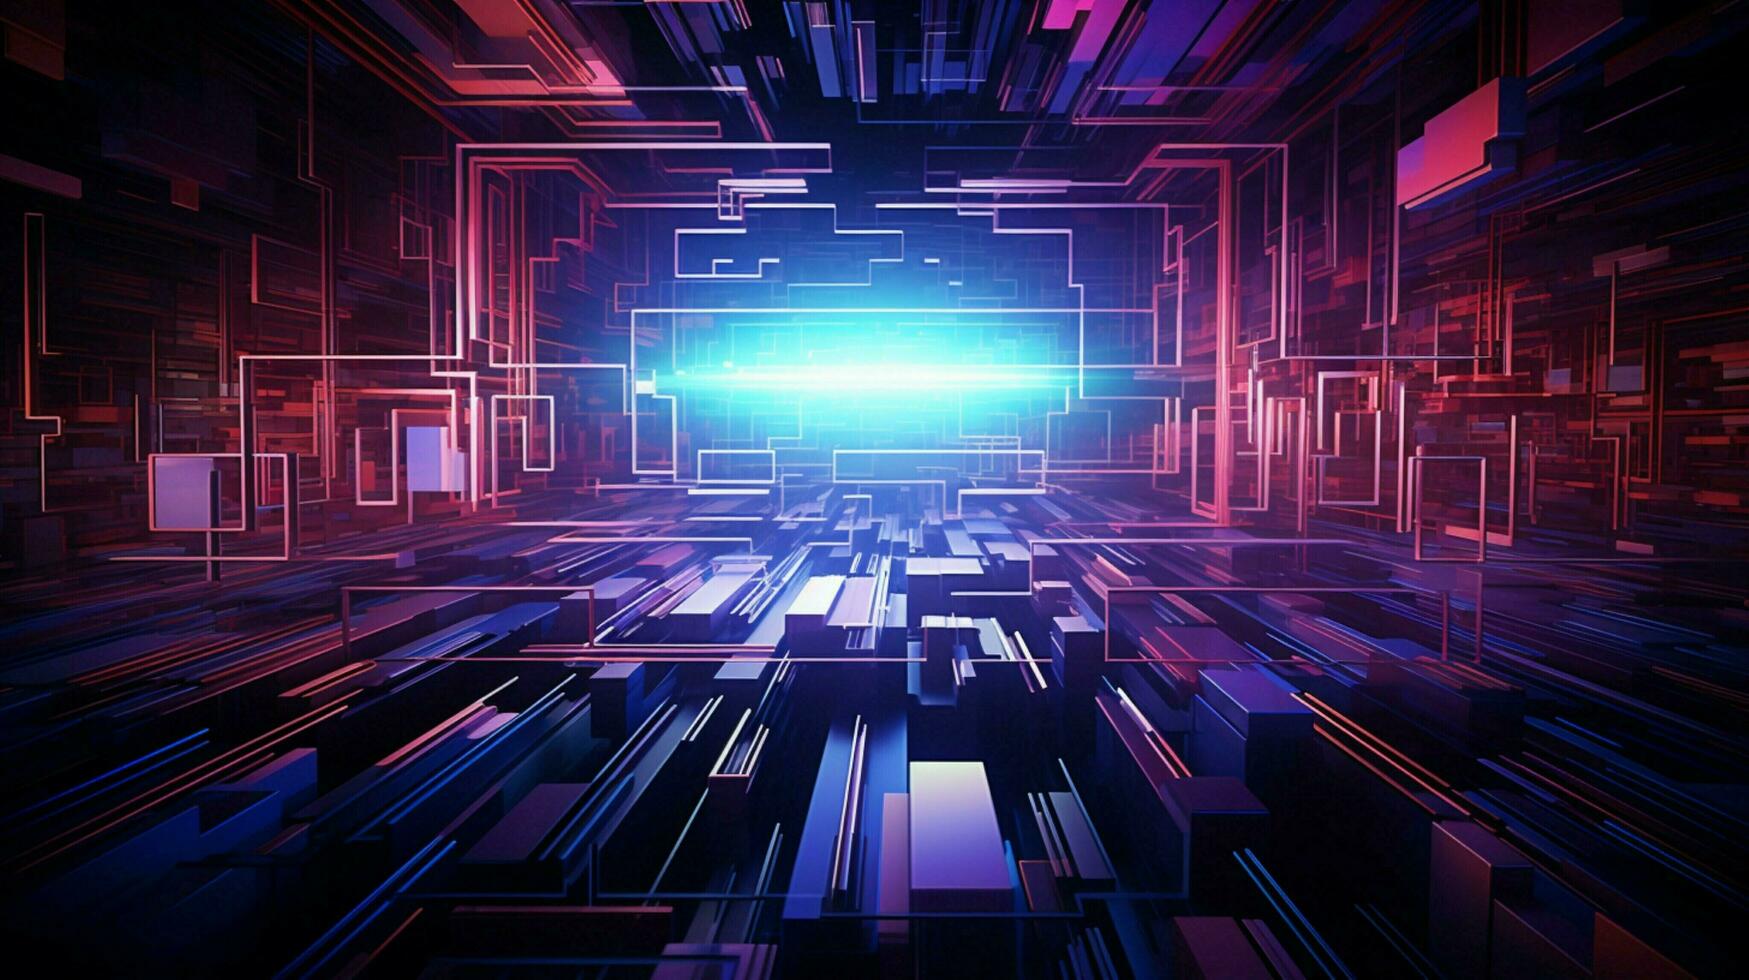 glowing computer monitor displays vibrant futuristic photo